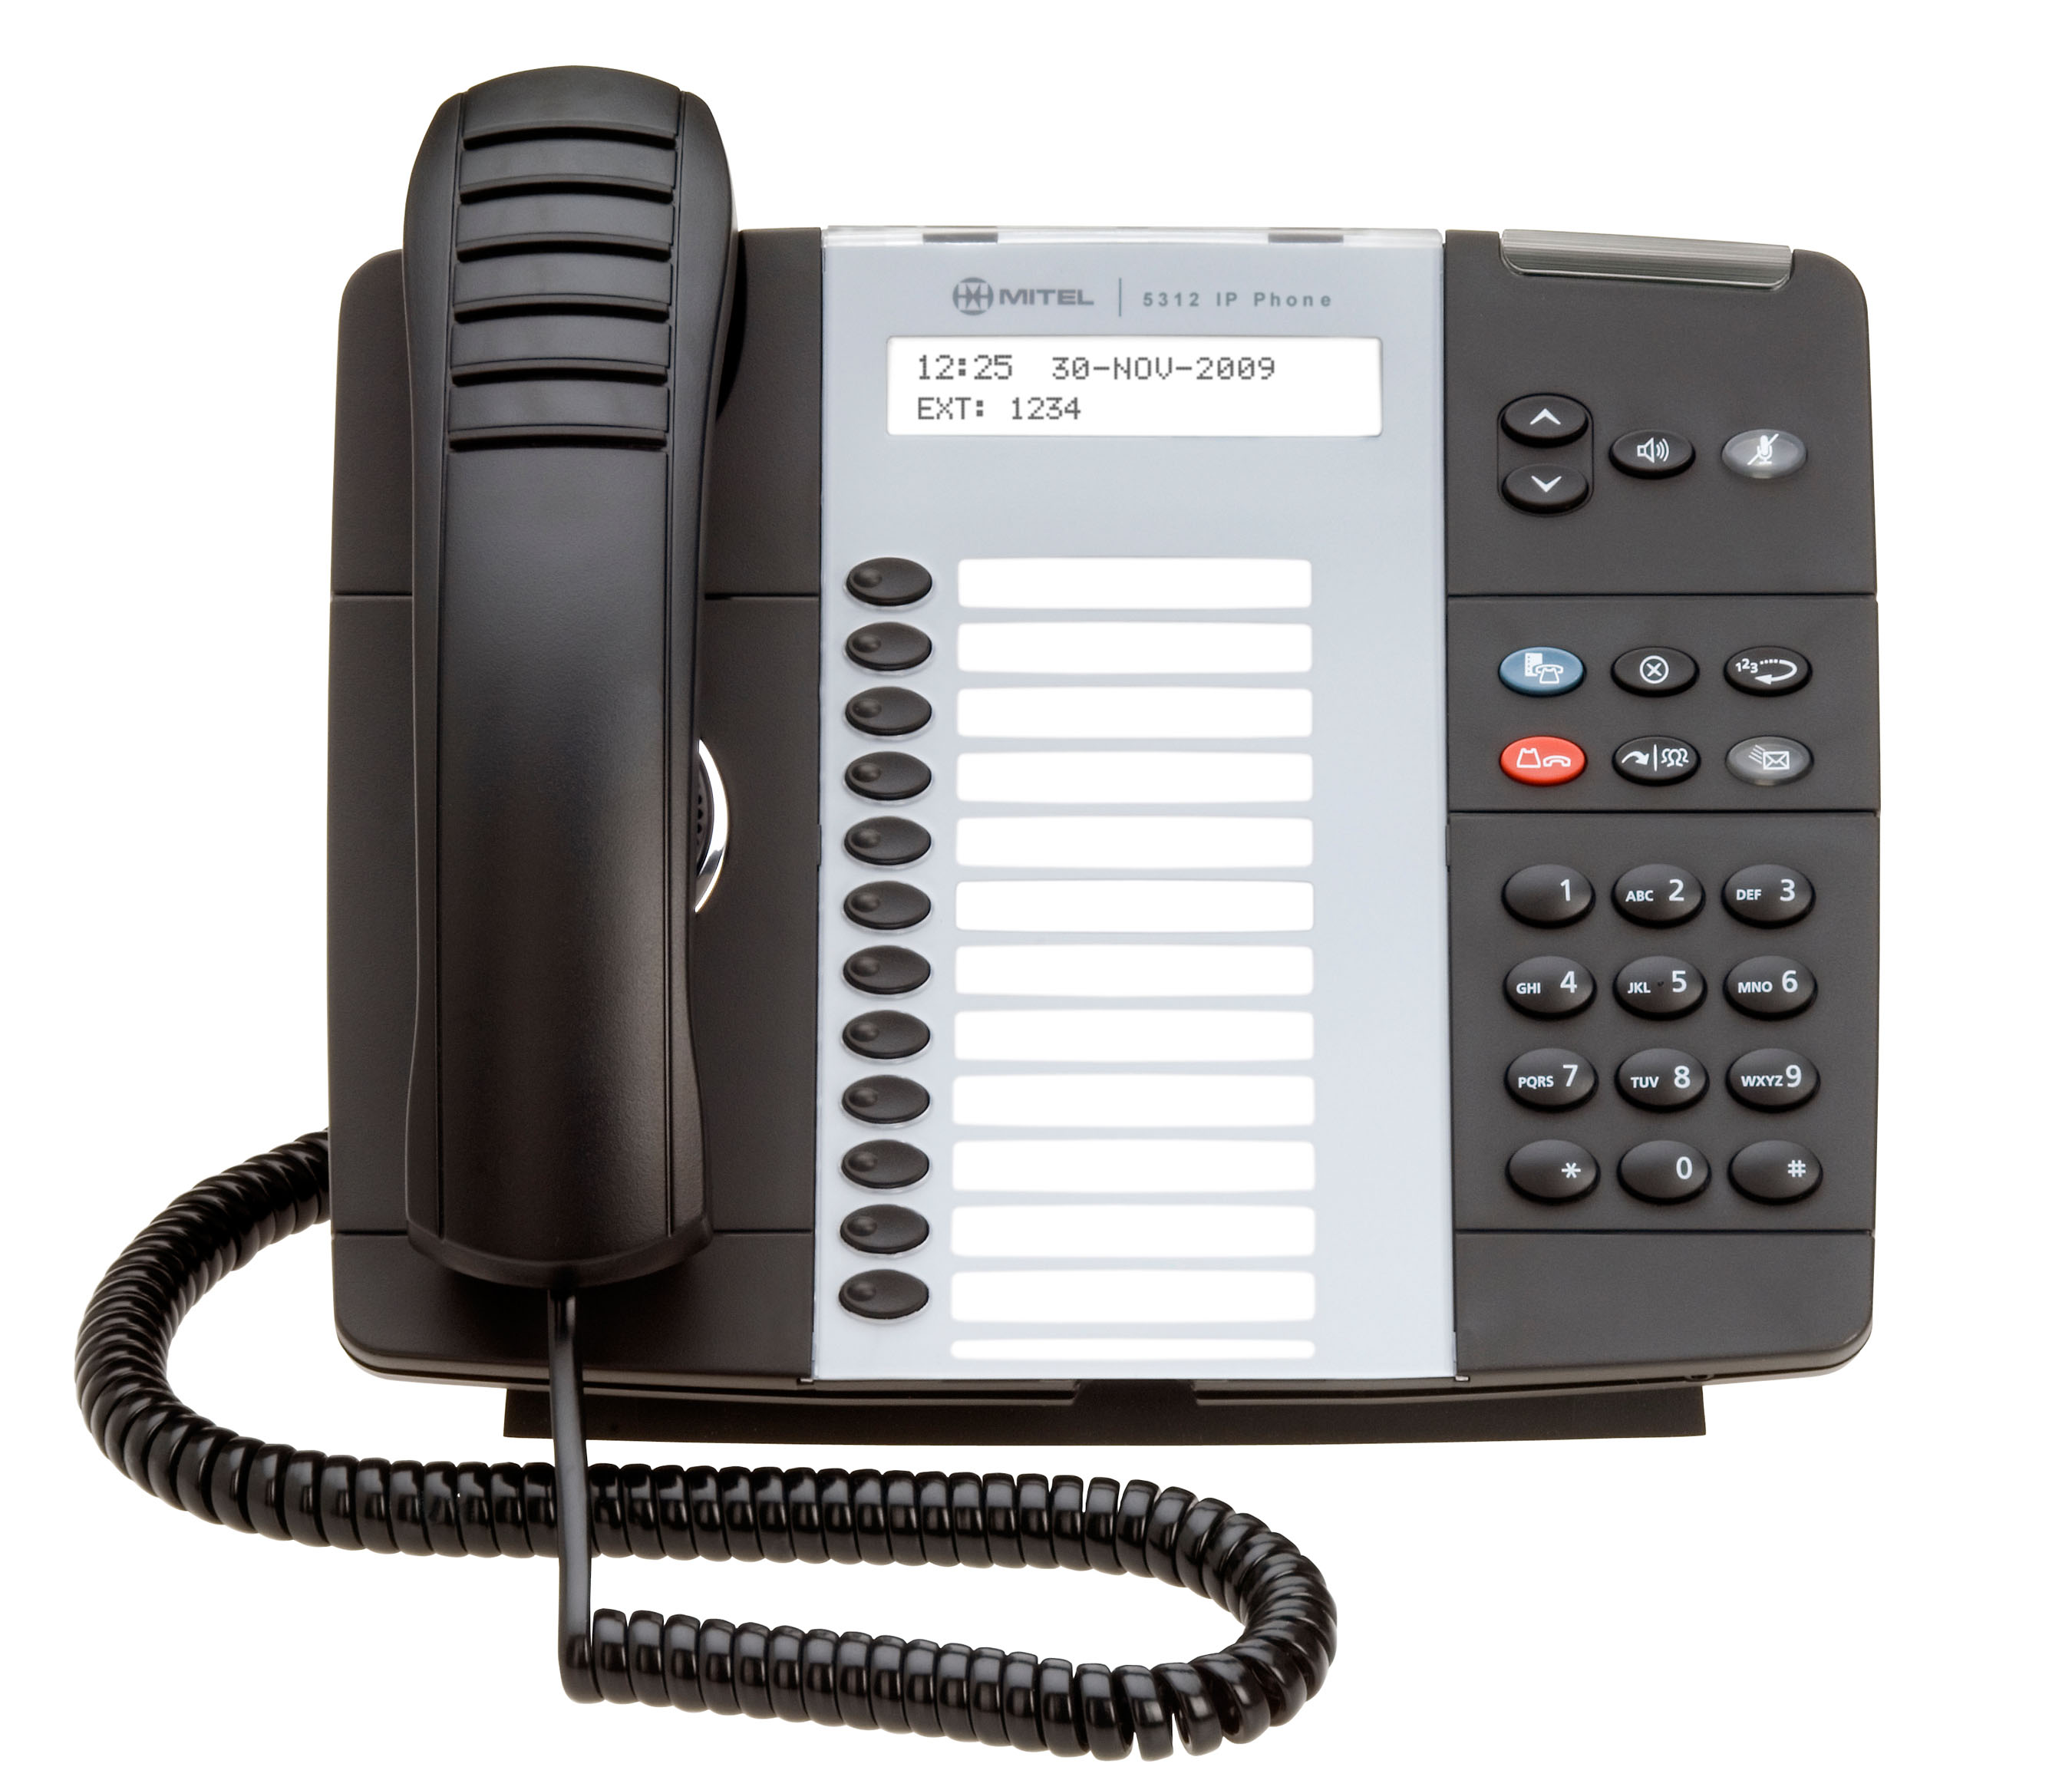 Mitel Model 5312 VoIP Office Telephone